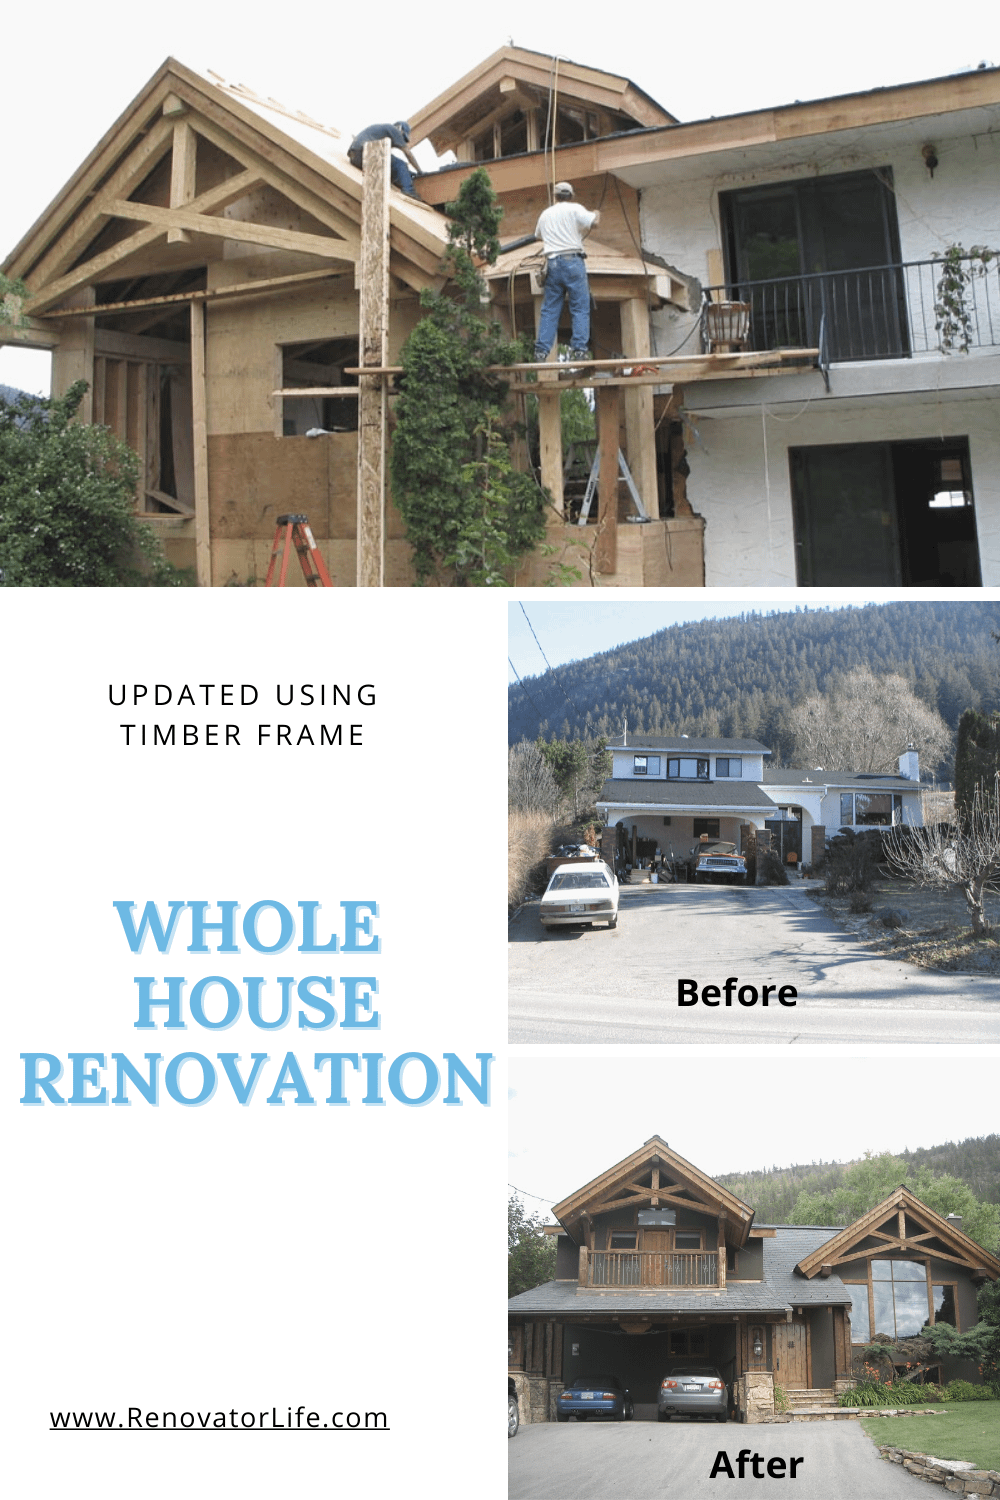 Whole house renovation